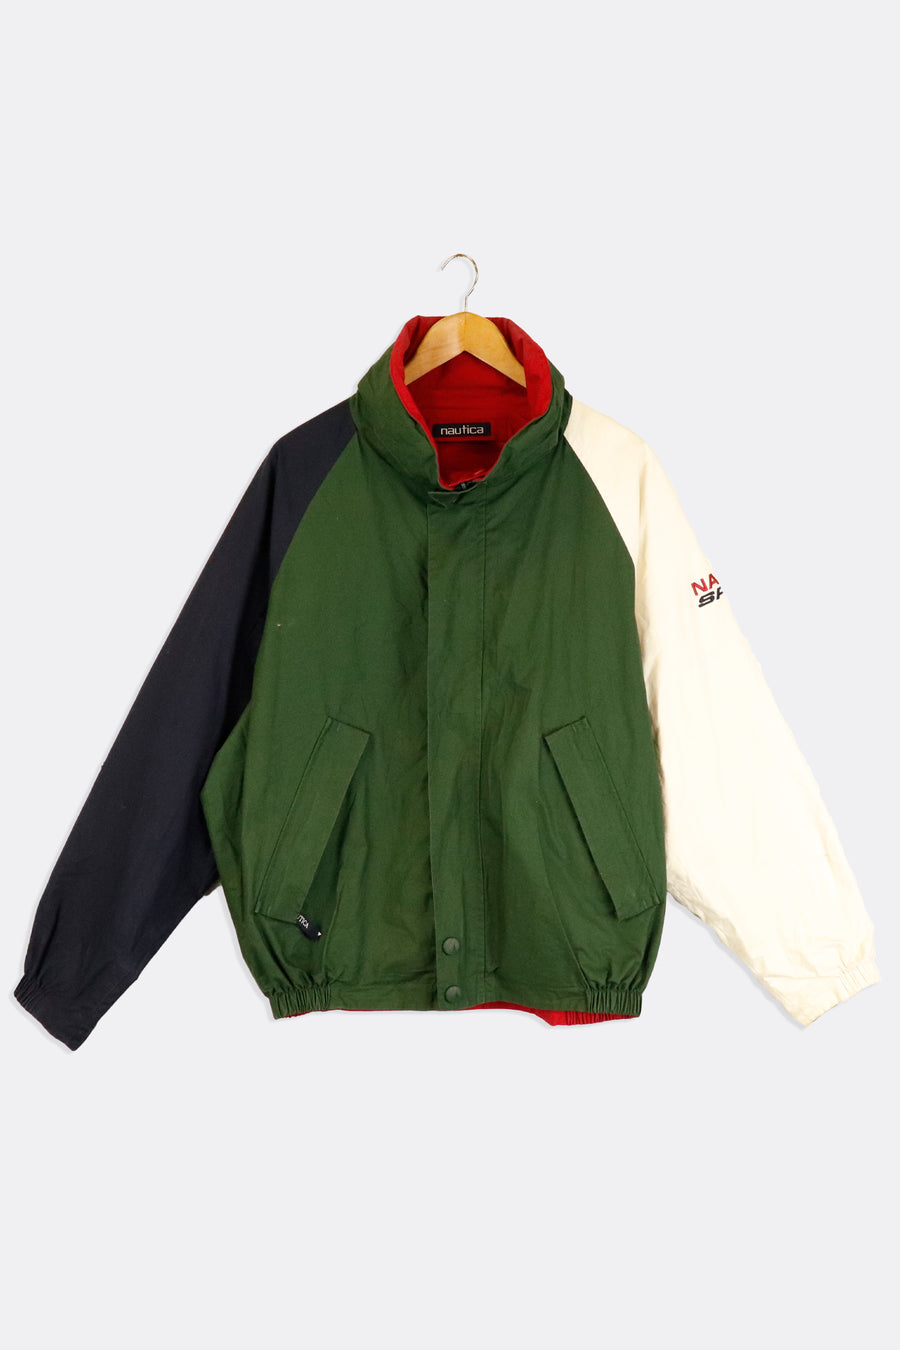 Vintage Nautica Sport Zip In Hood Reversible Cream And Green Full Red Jacket